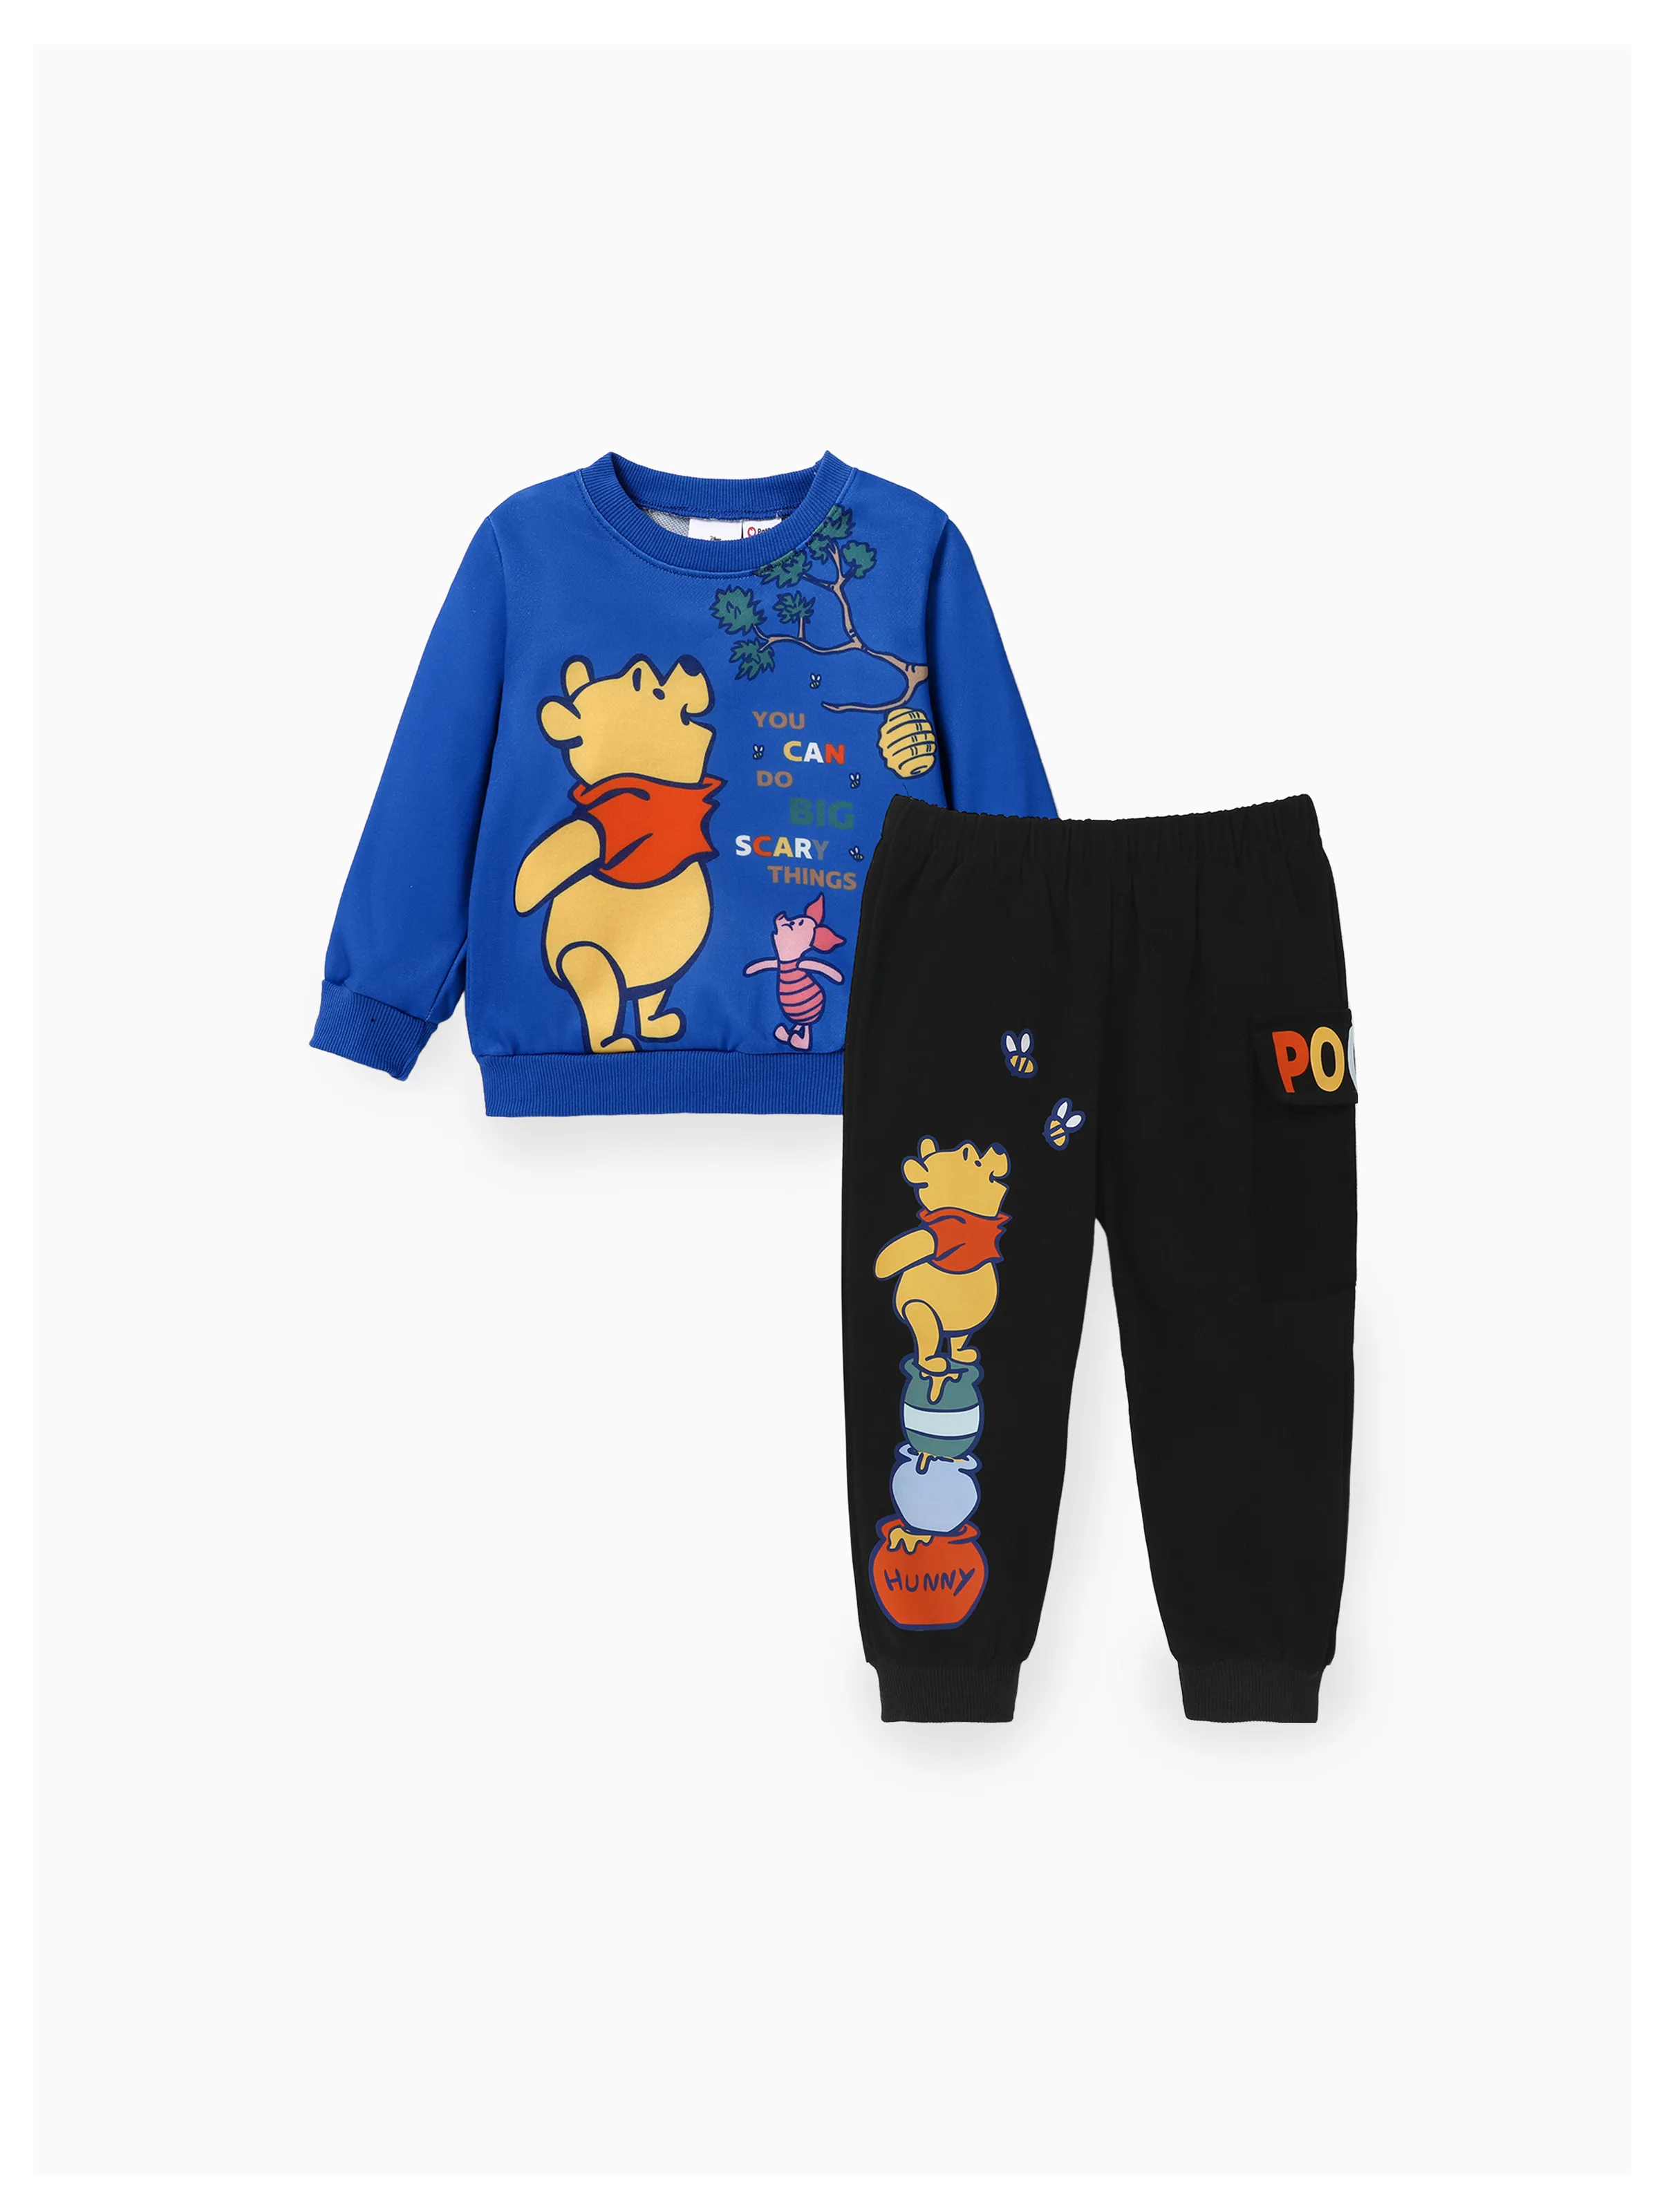 

Disney Winnie the Pooh Positioning Printed Sweatshirt and Pants